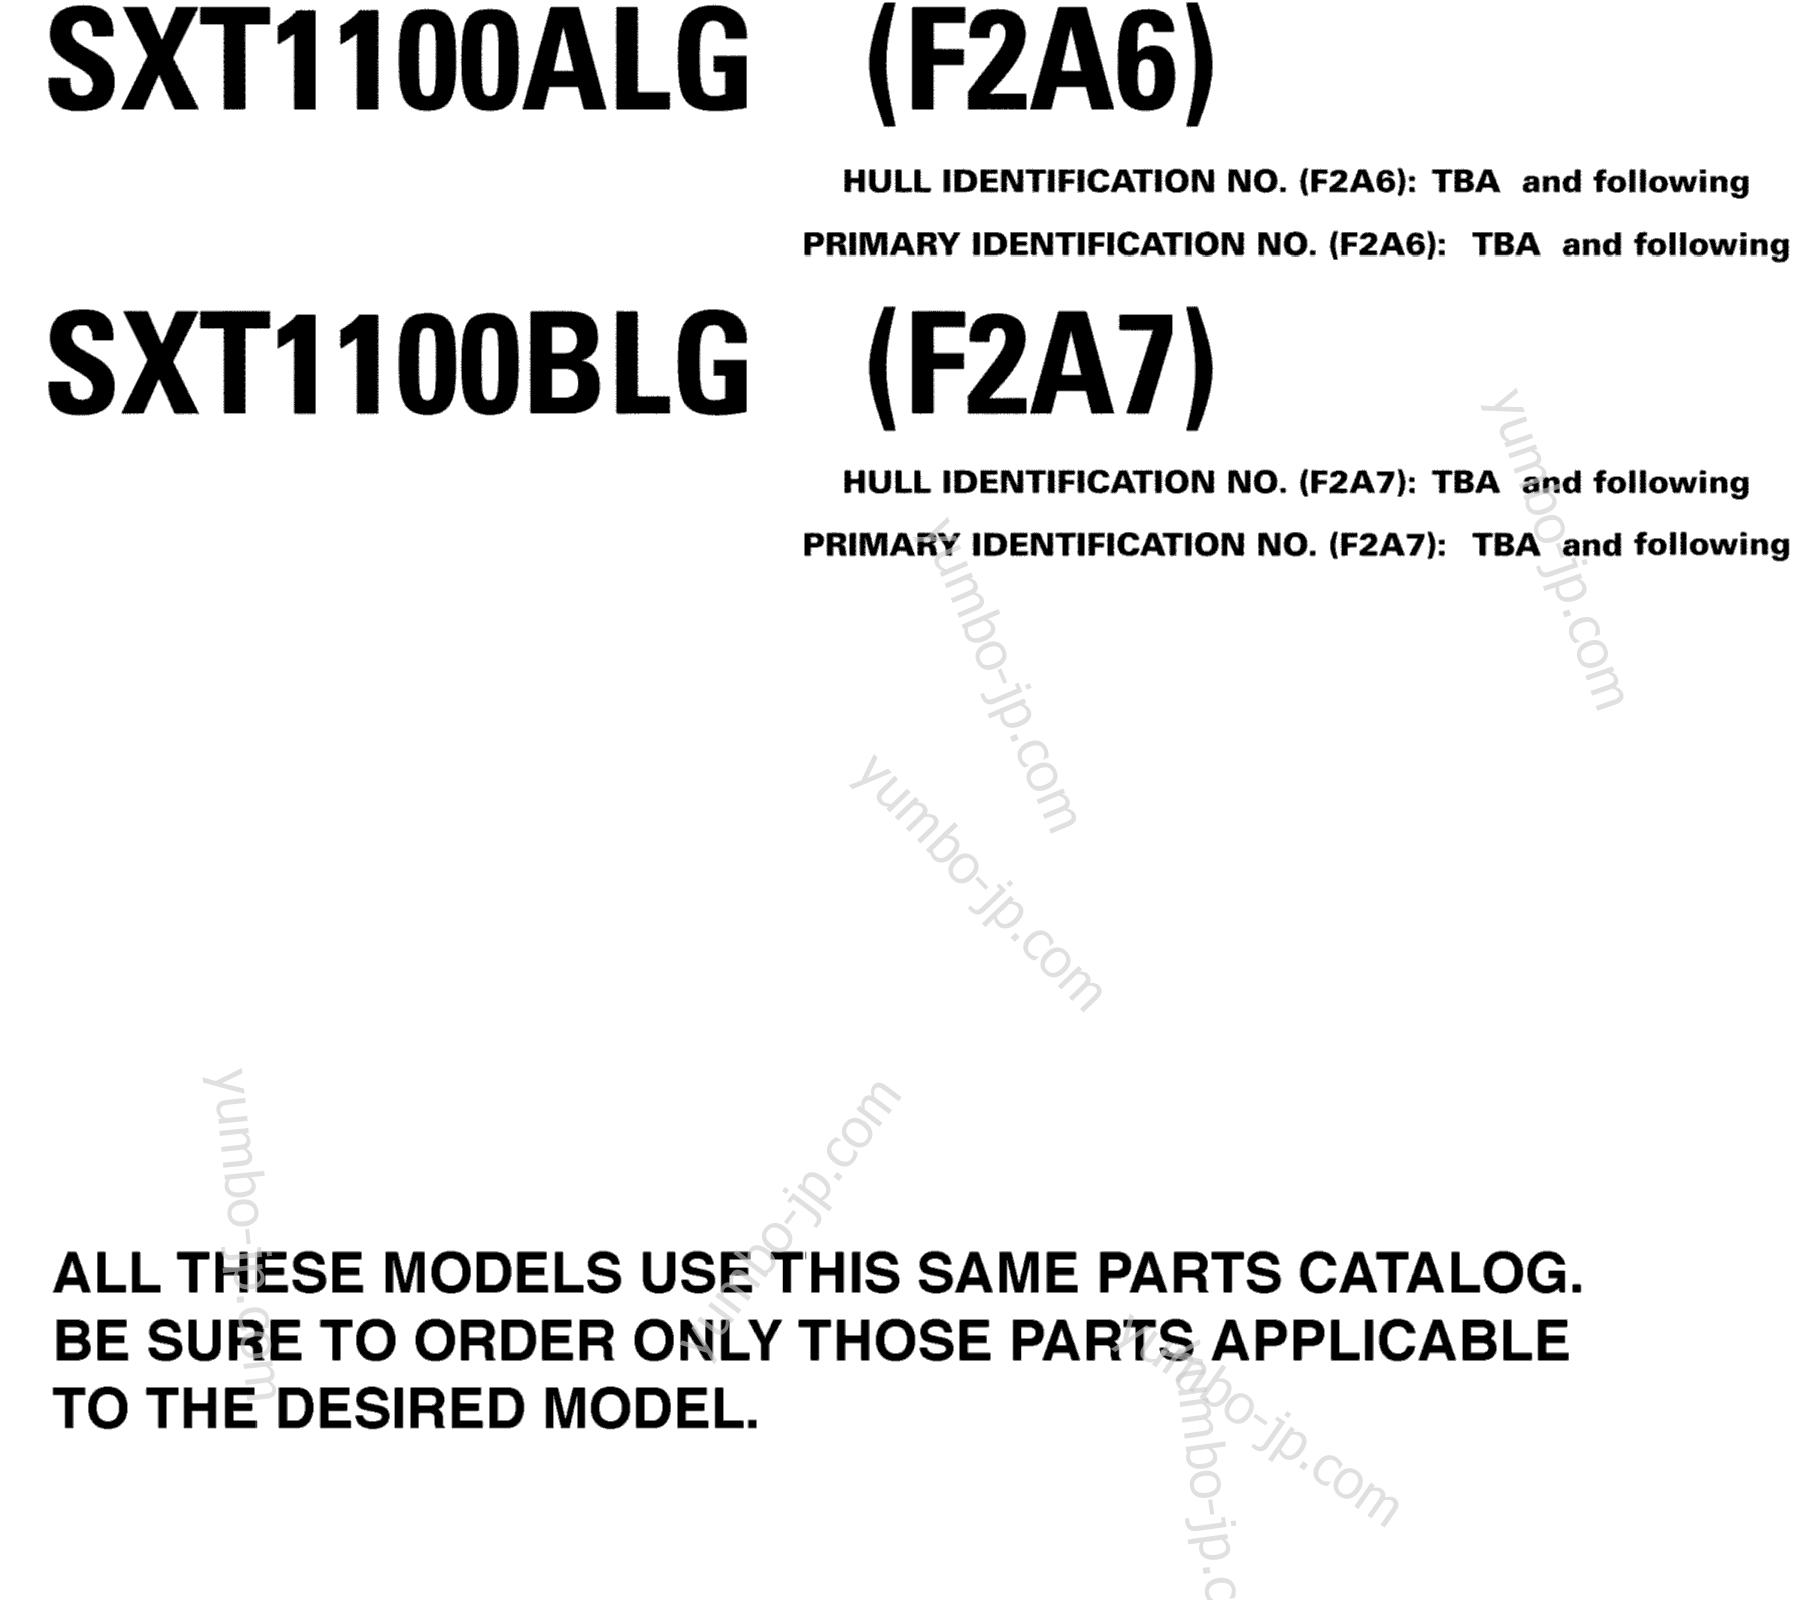 Models In This Catalog для катеров YAMAHA AR230 HO CA & NY (SXT1100BLG) CA 2008 г.